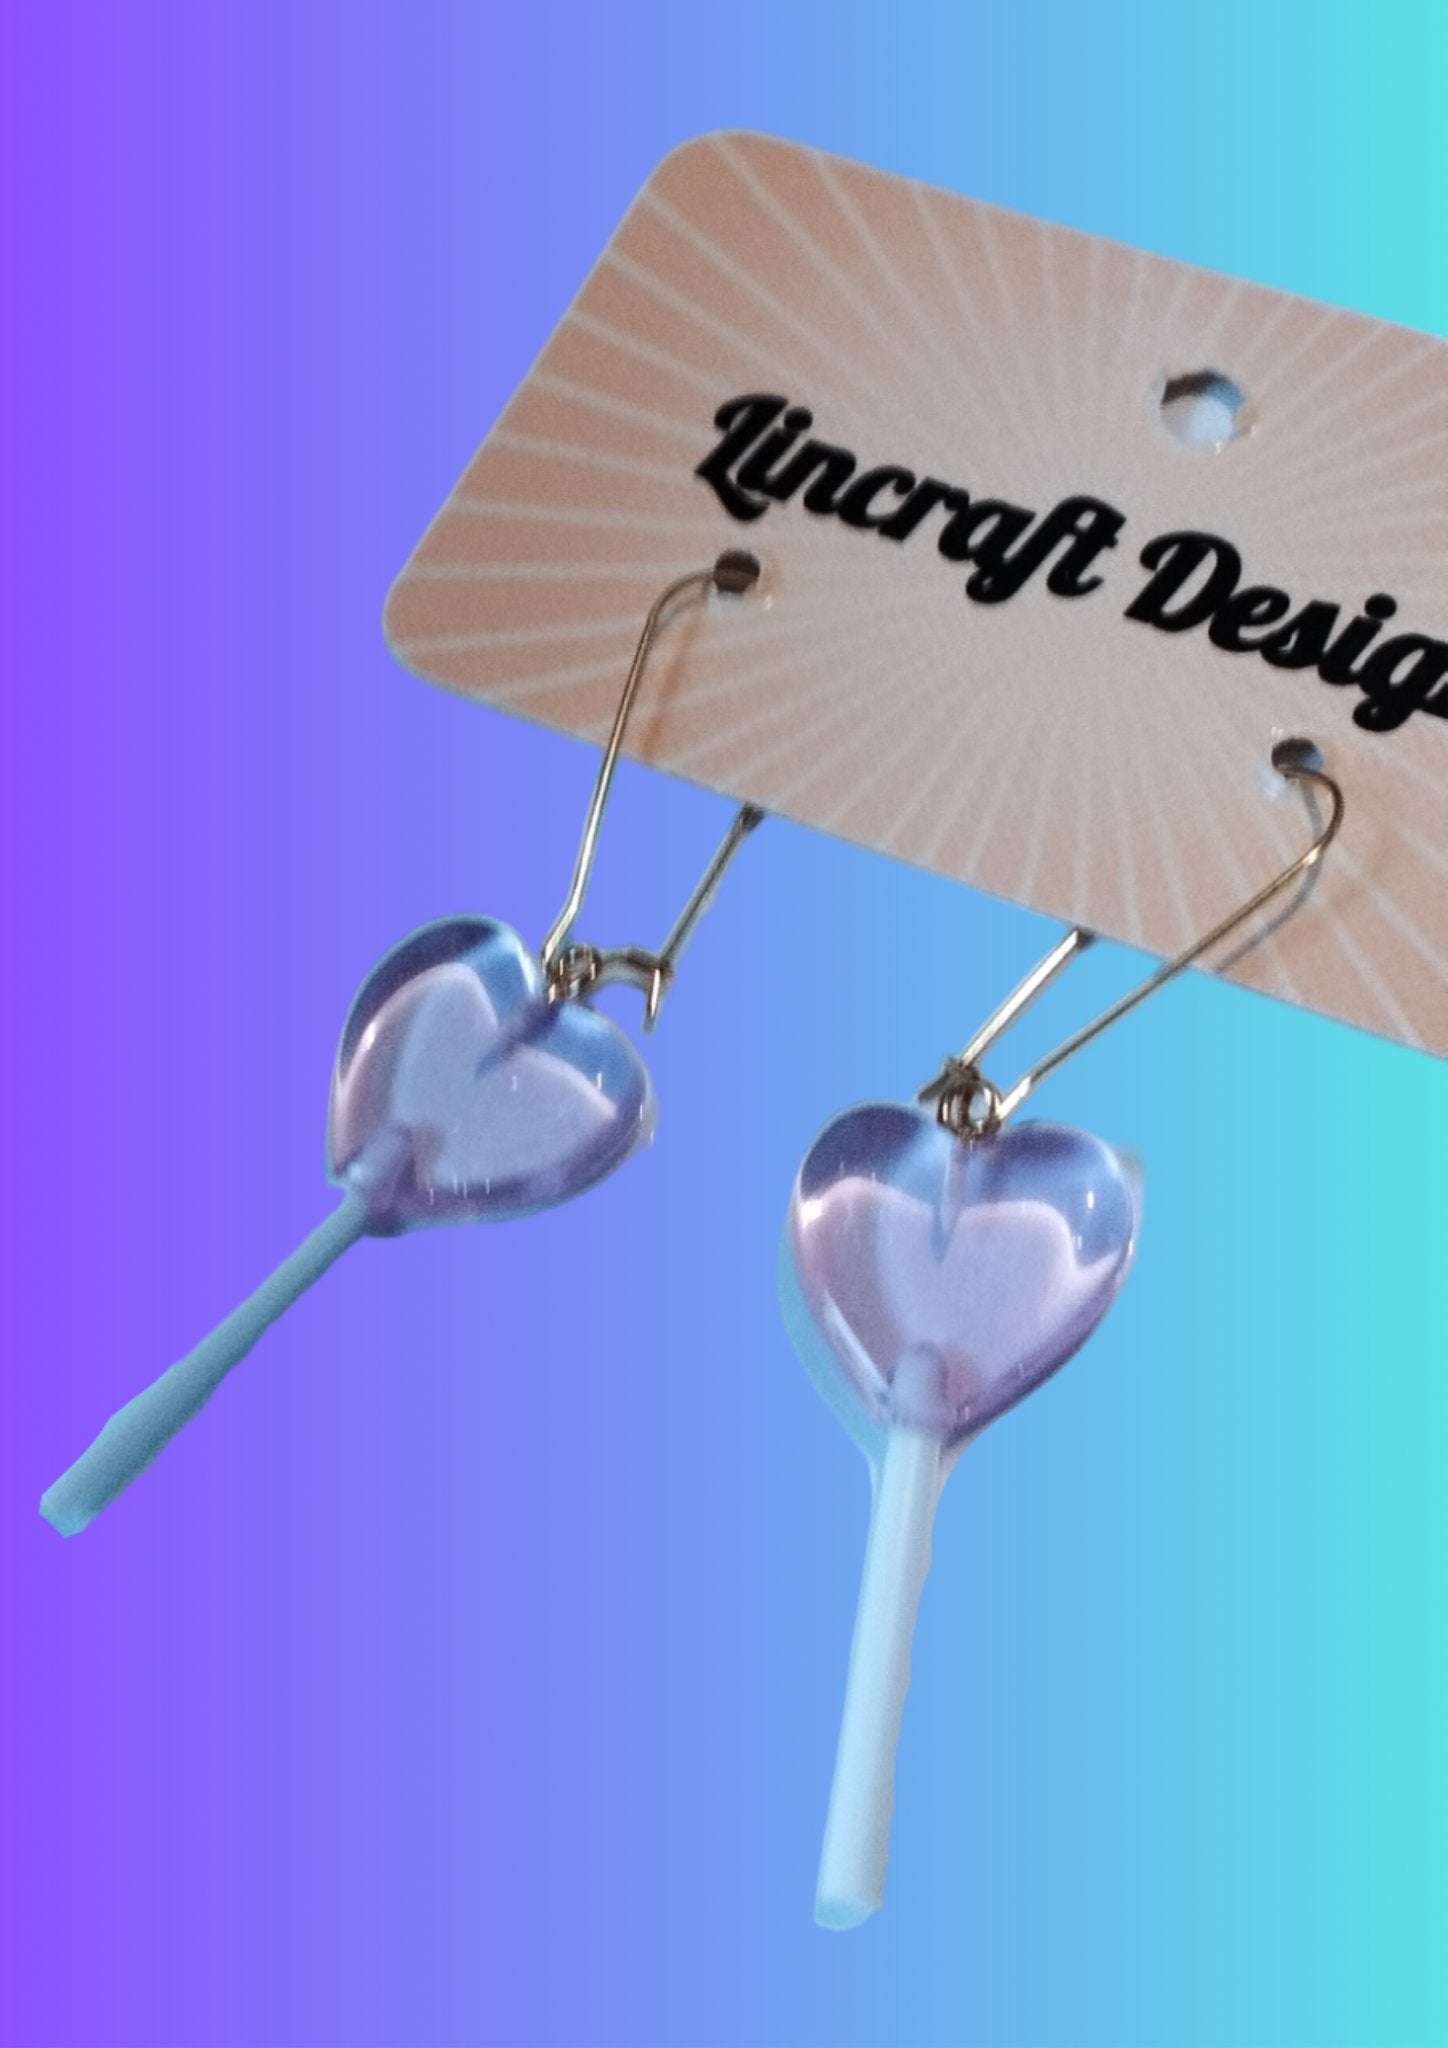 Colorful Heart Lollipop Acrylic Earrings | Irish Handmade Jewellery - Lincraft Design